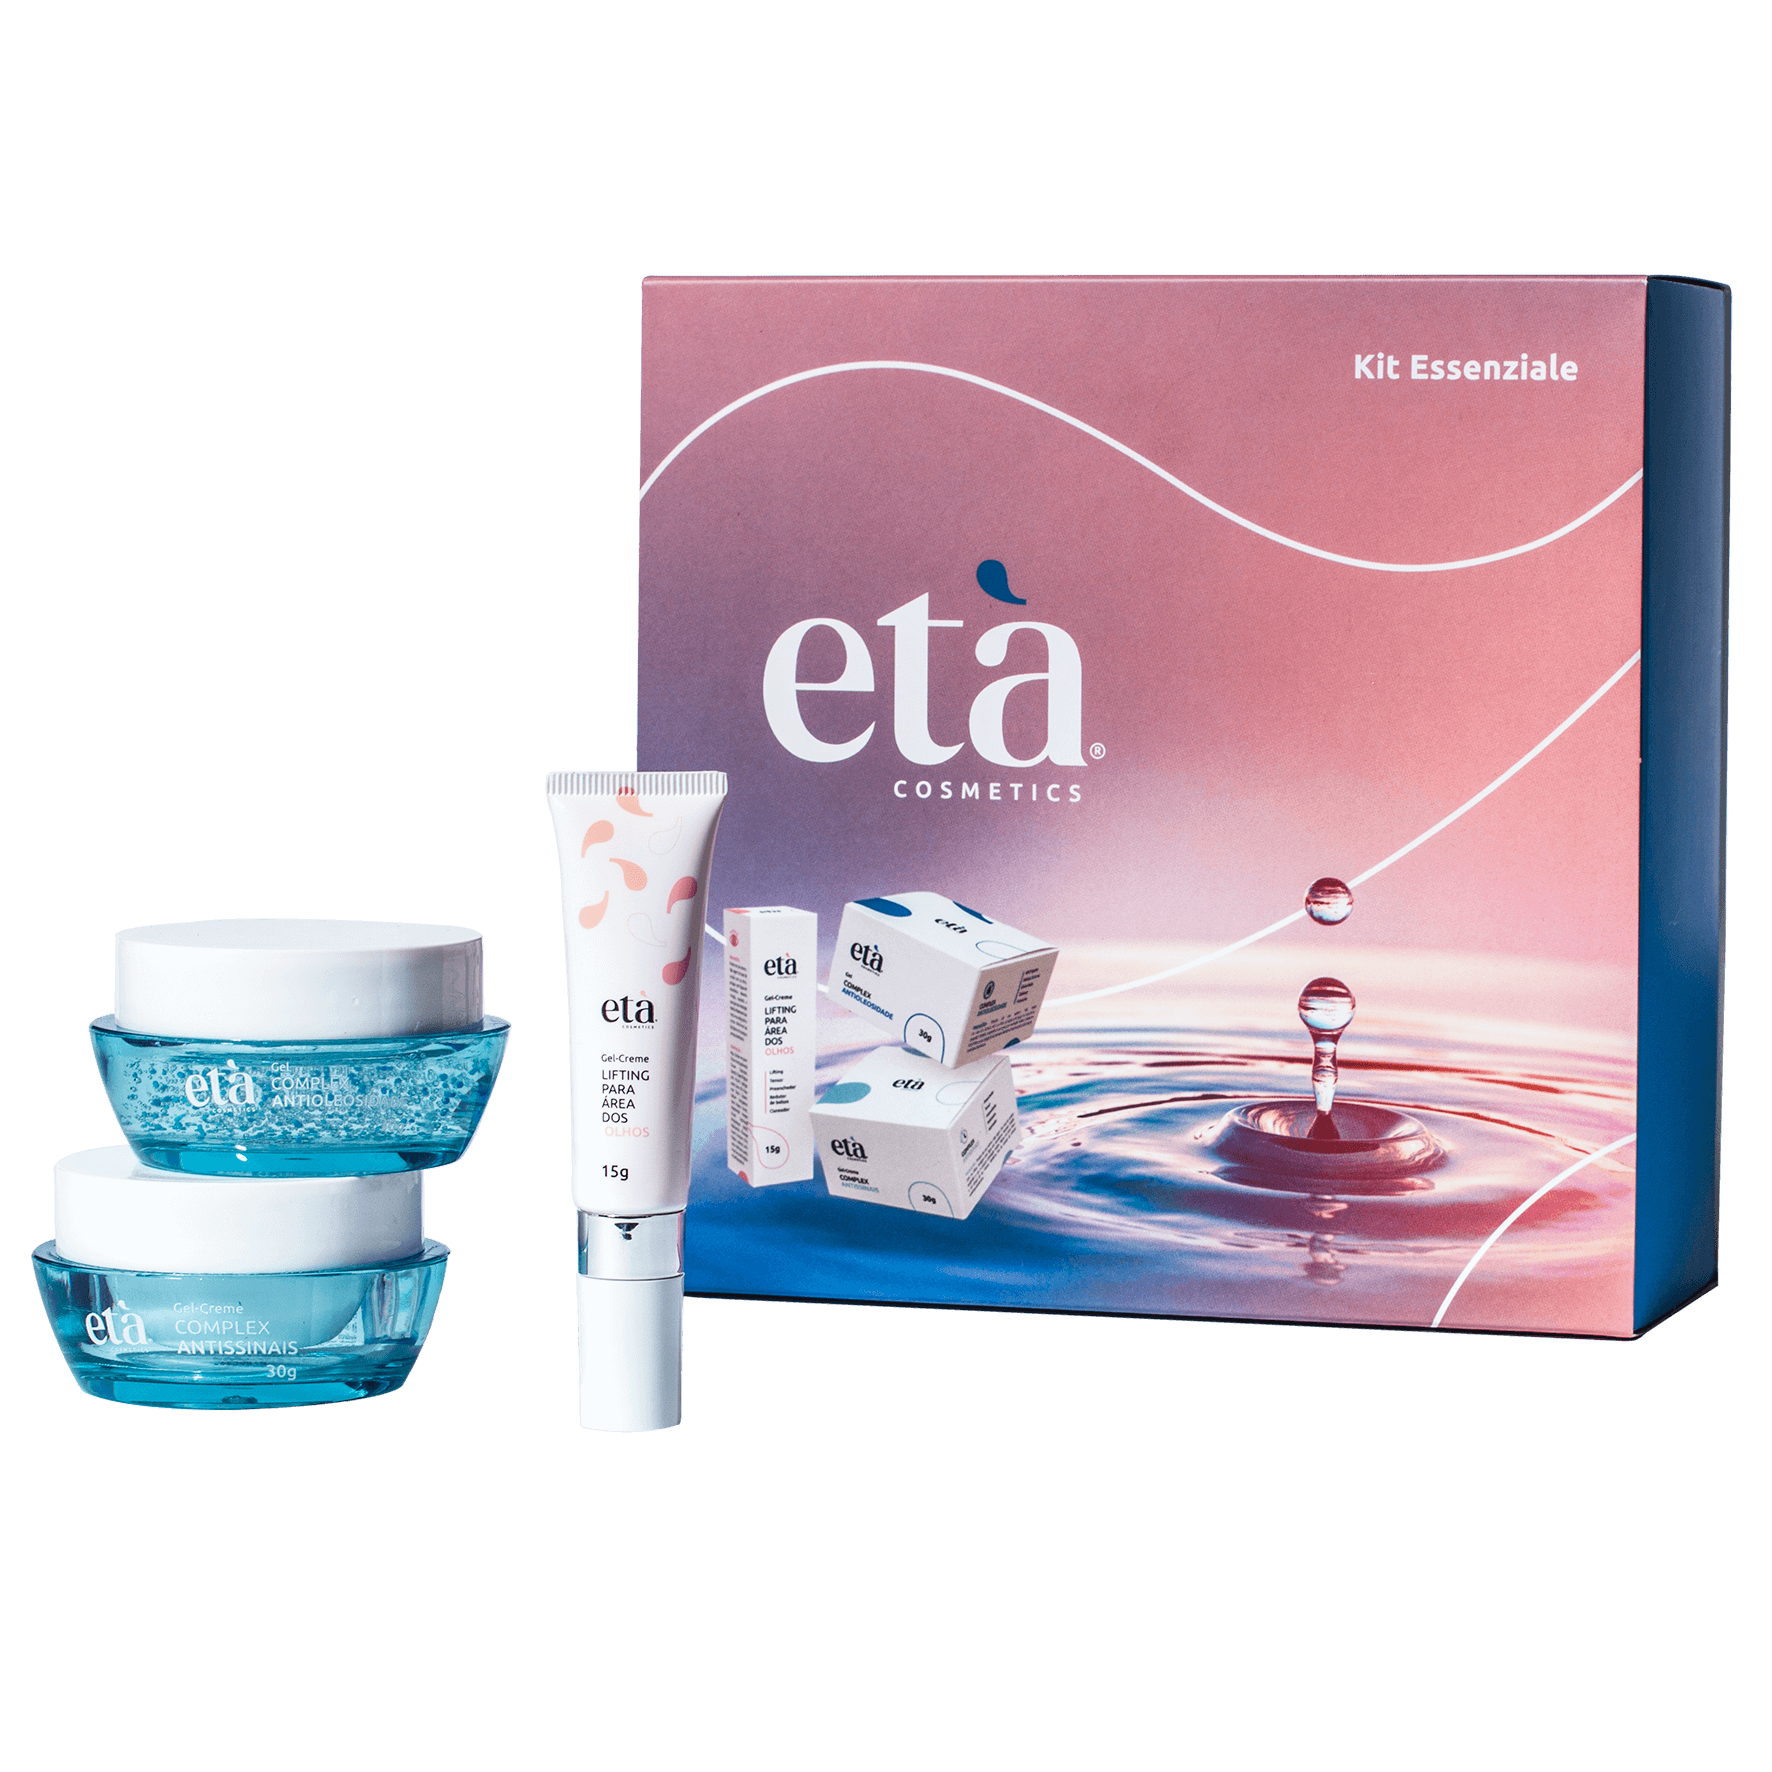 Kit Essenziale da Età Cosmetics reúne 3 cosméticos exclusivos